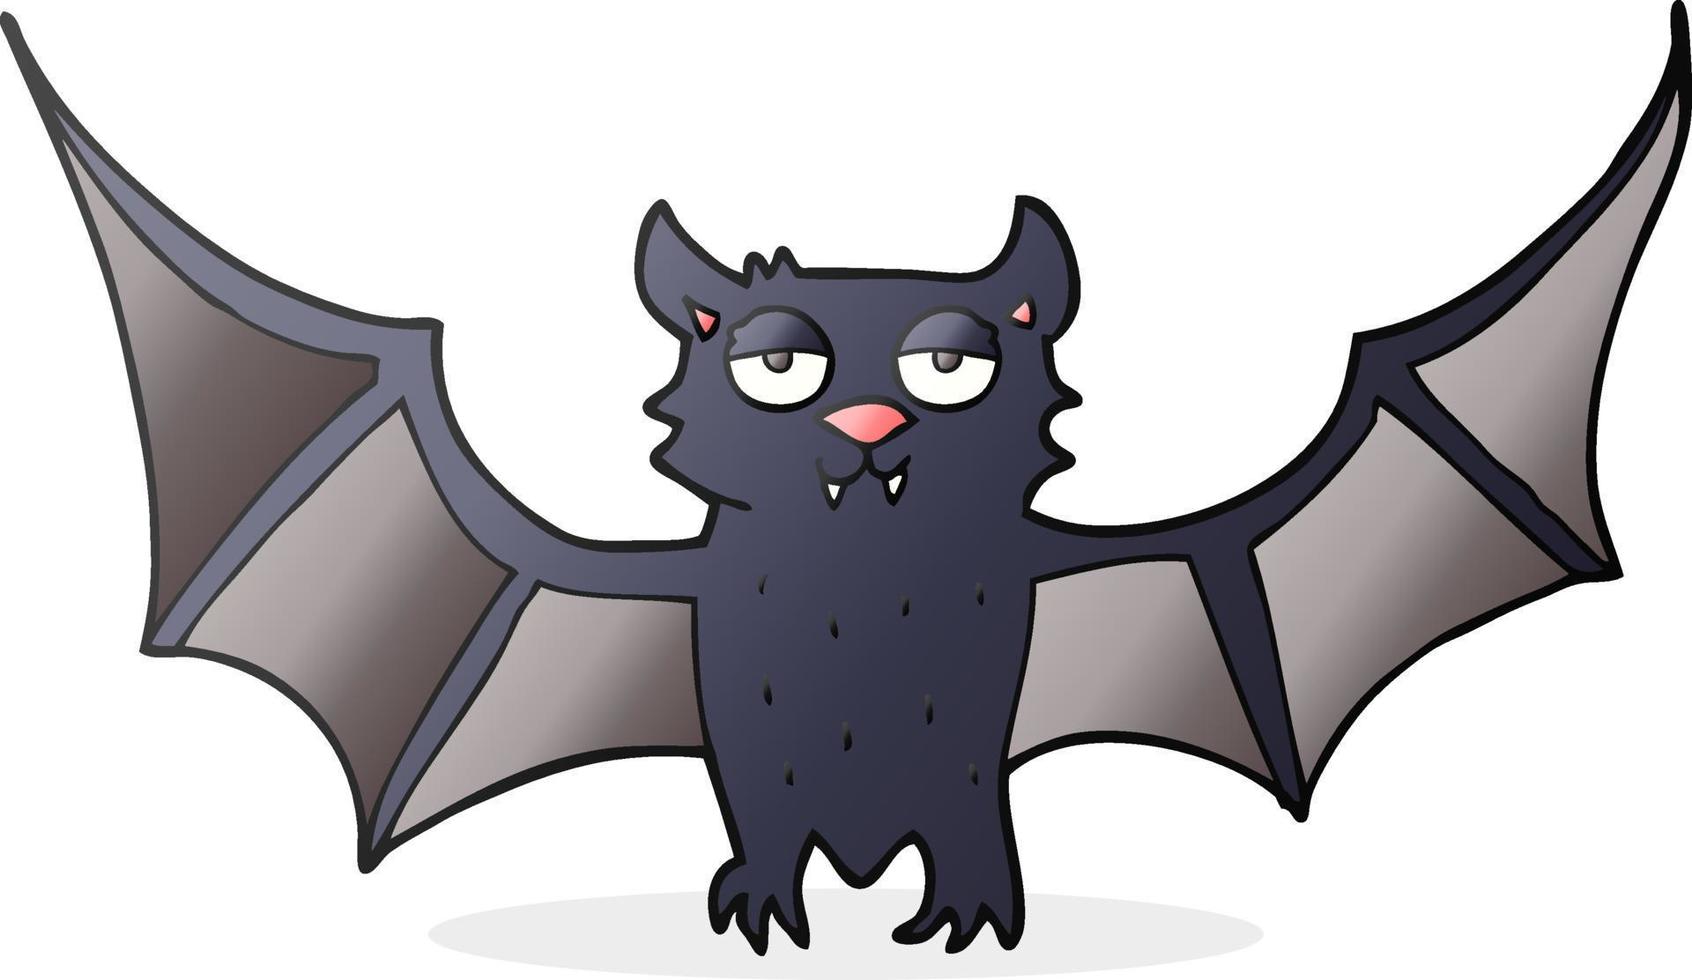 cartoon halloween bat vector